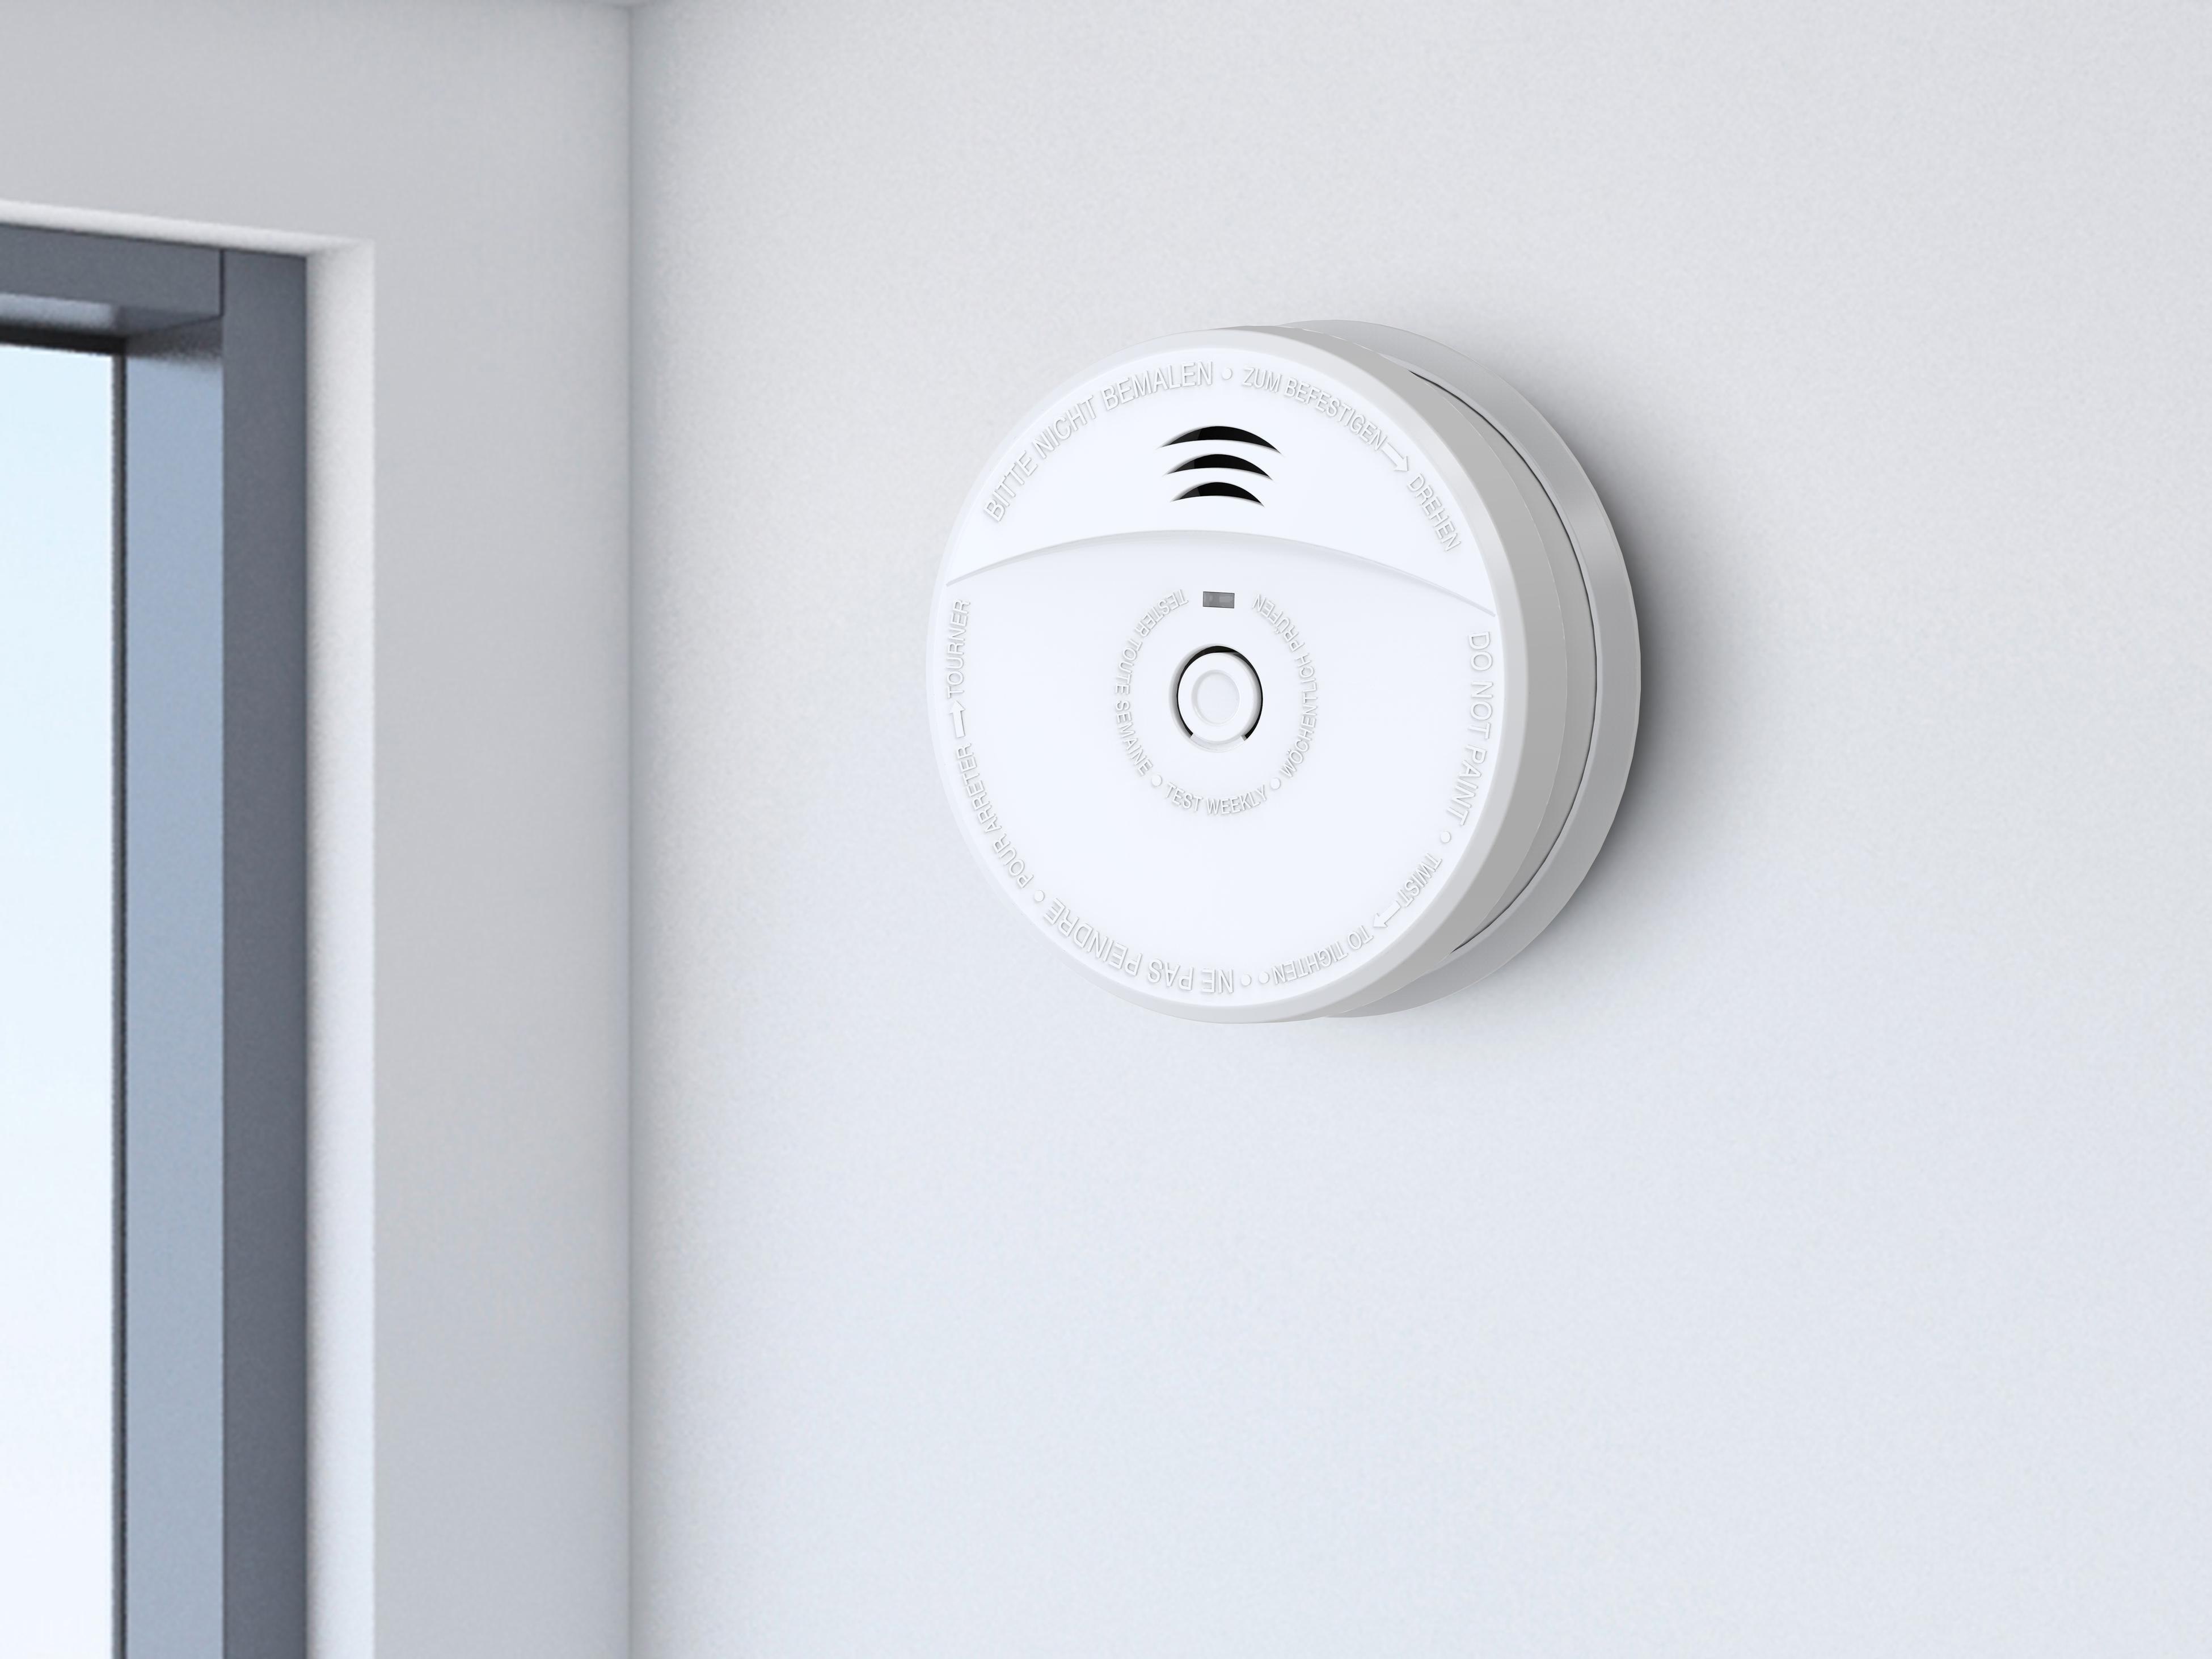 How to Install a Smoke Detector Unit at Home - Bob Vila